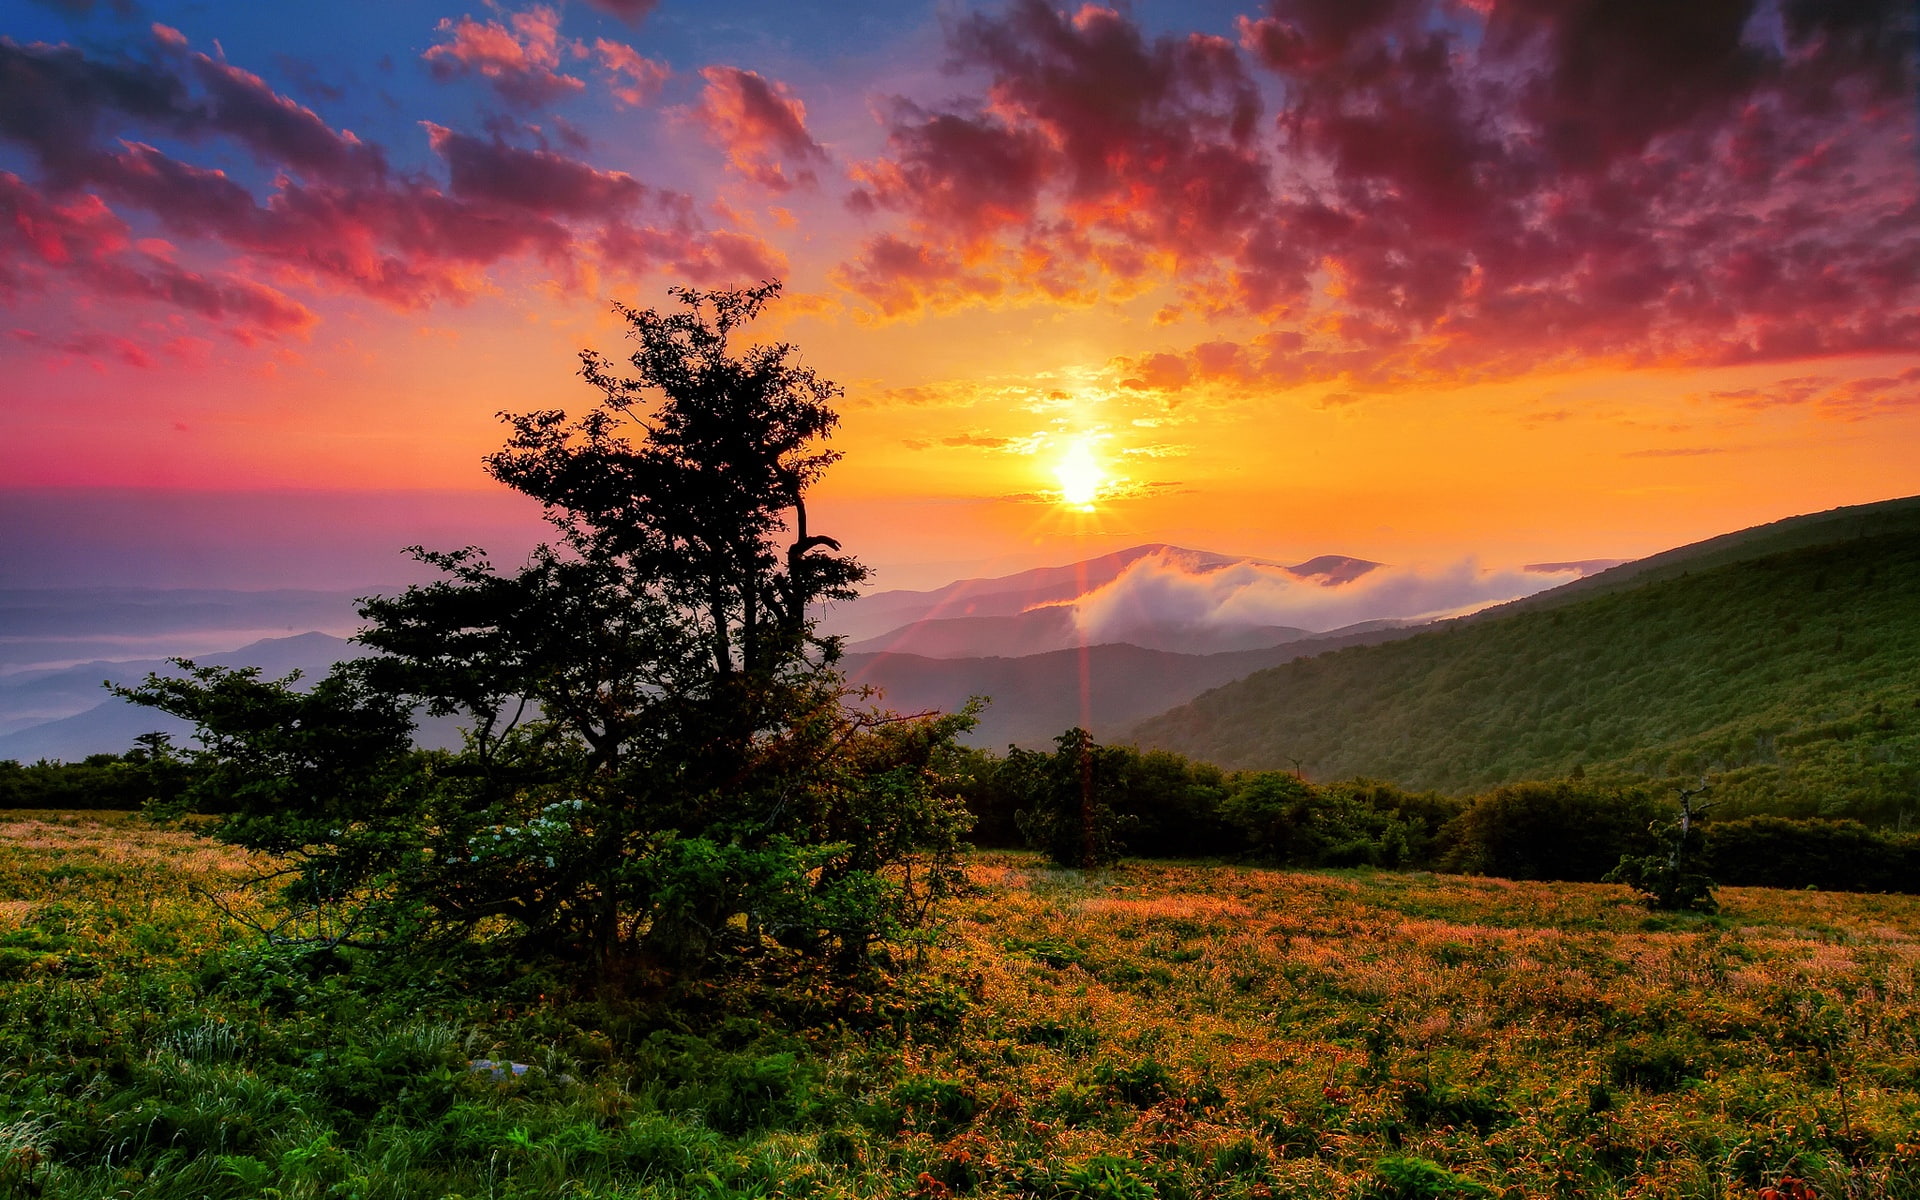 USA, North Carolina, morning, clouds, sunrise, mountains, hills, trees